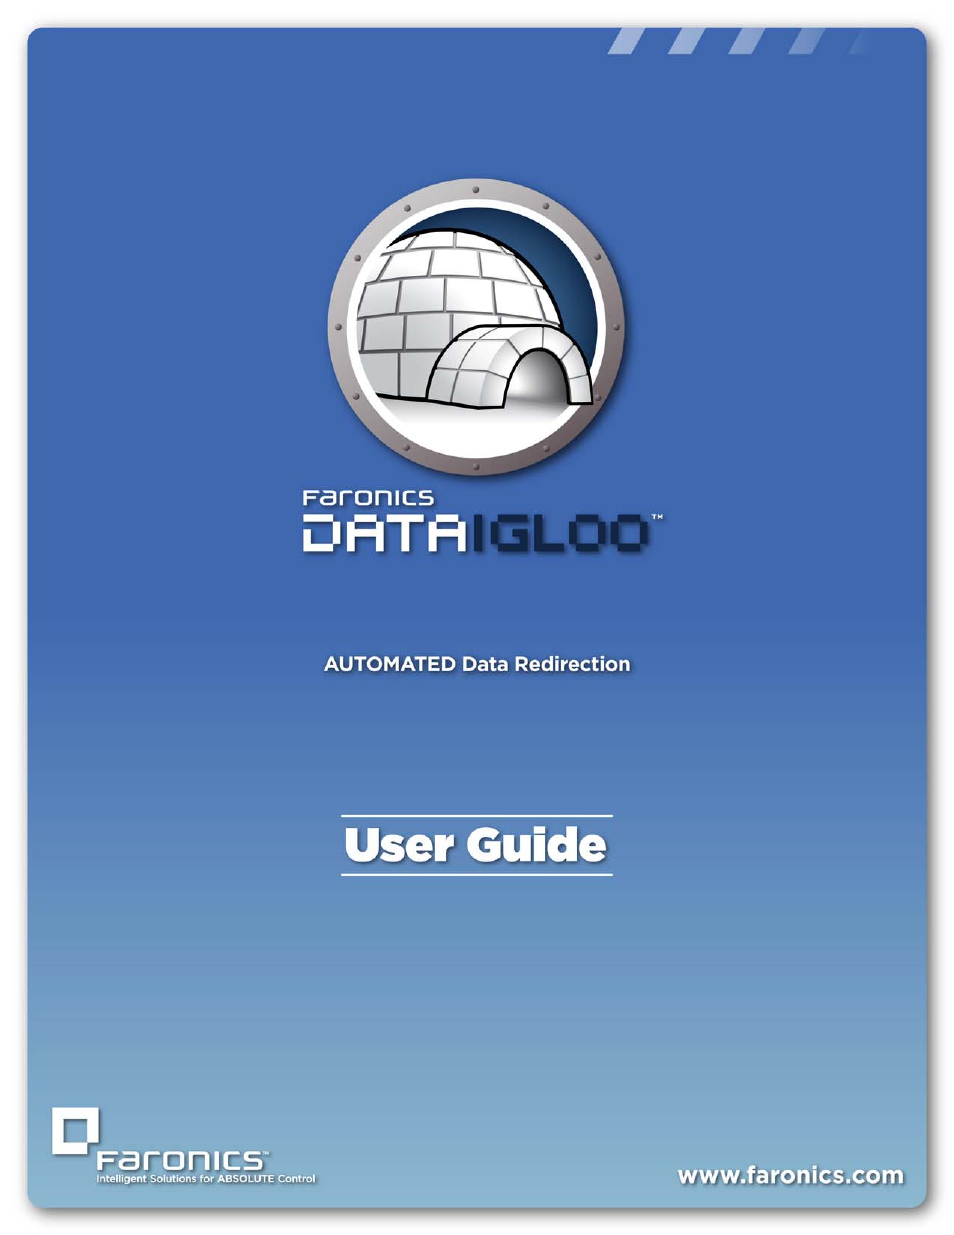 Faronics Data Igloo Standard User Manual | 63 pages